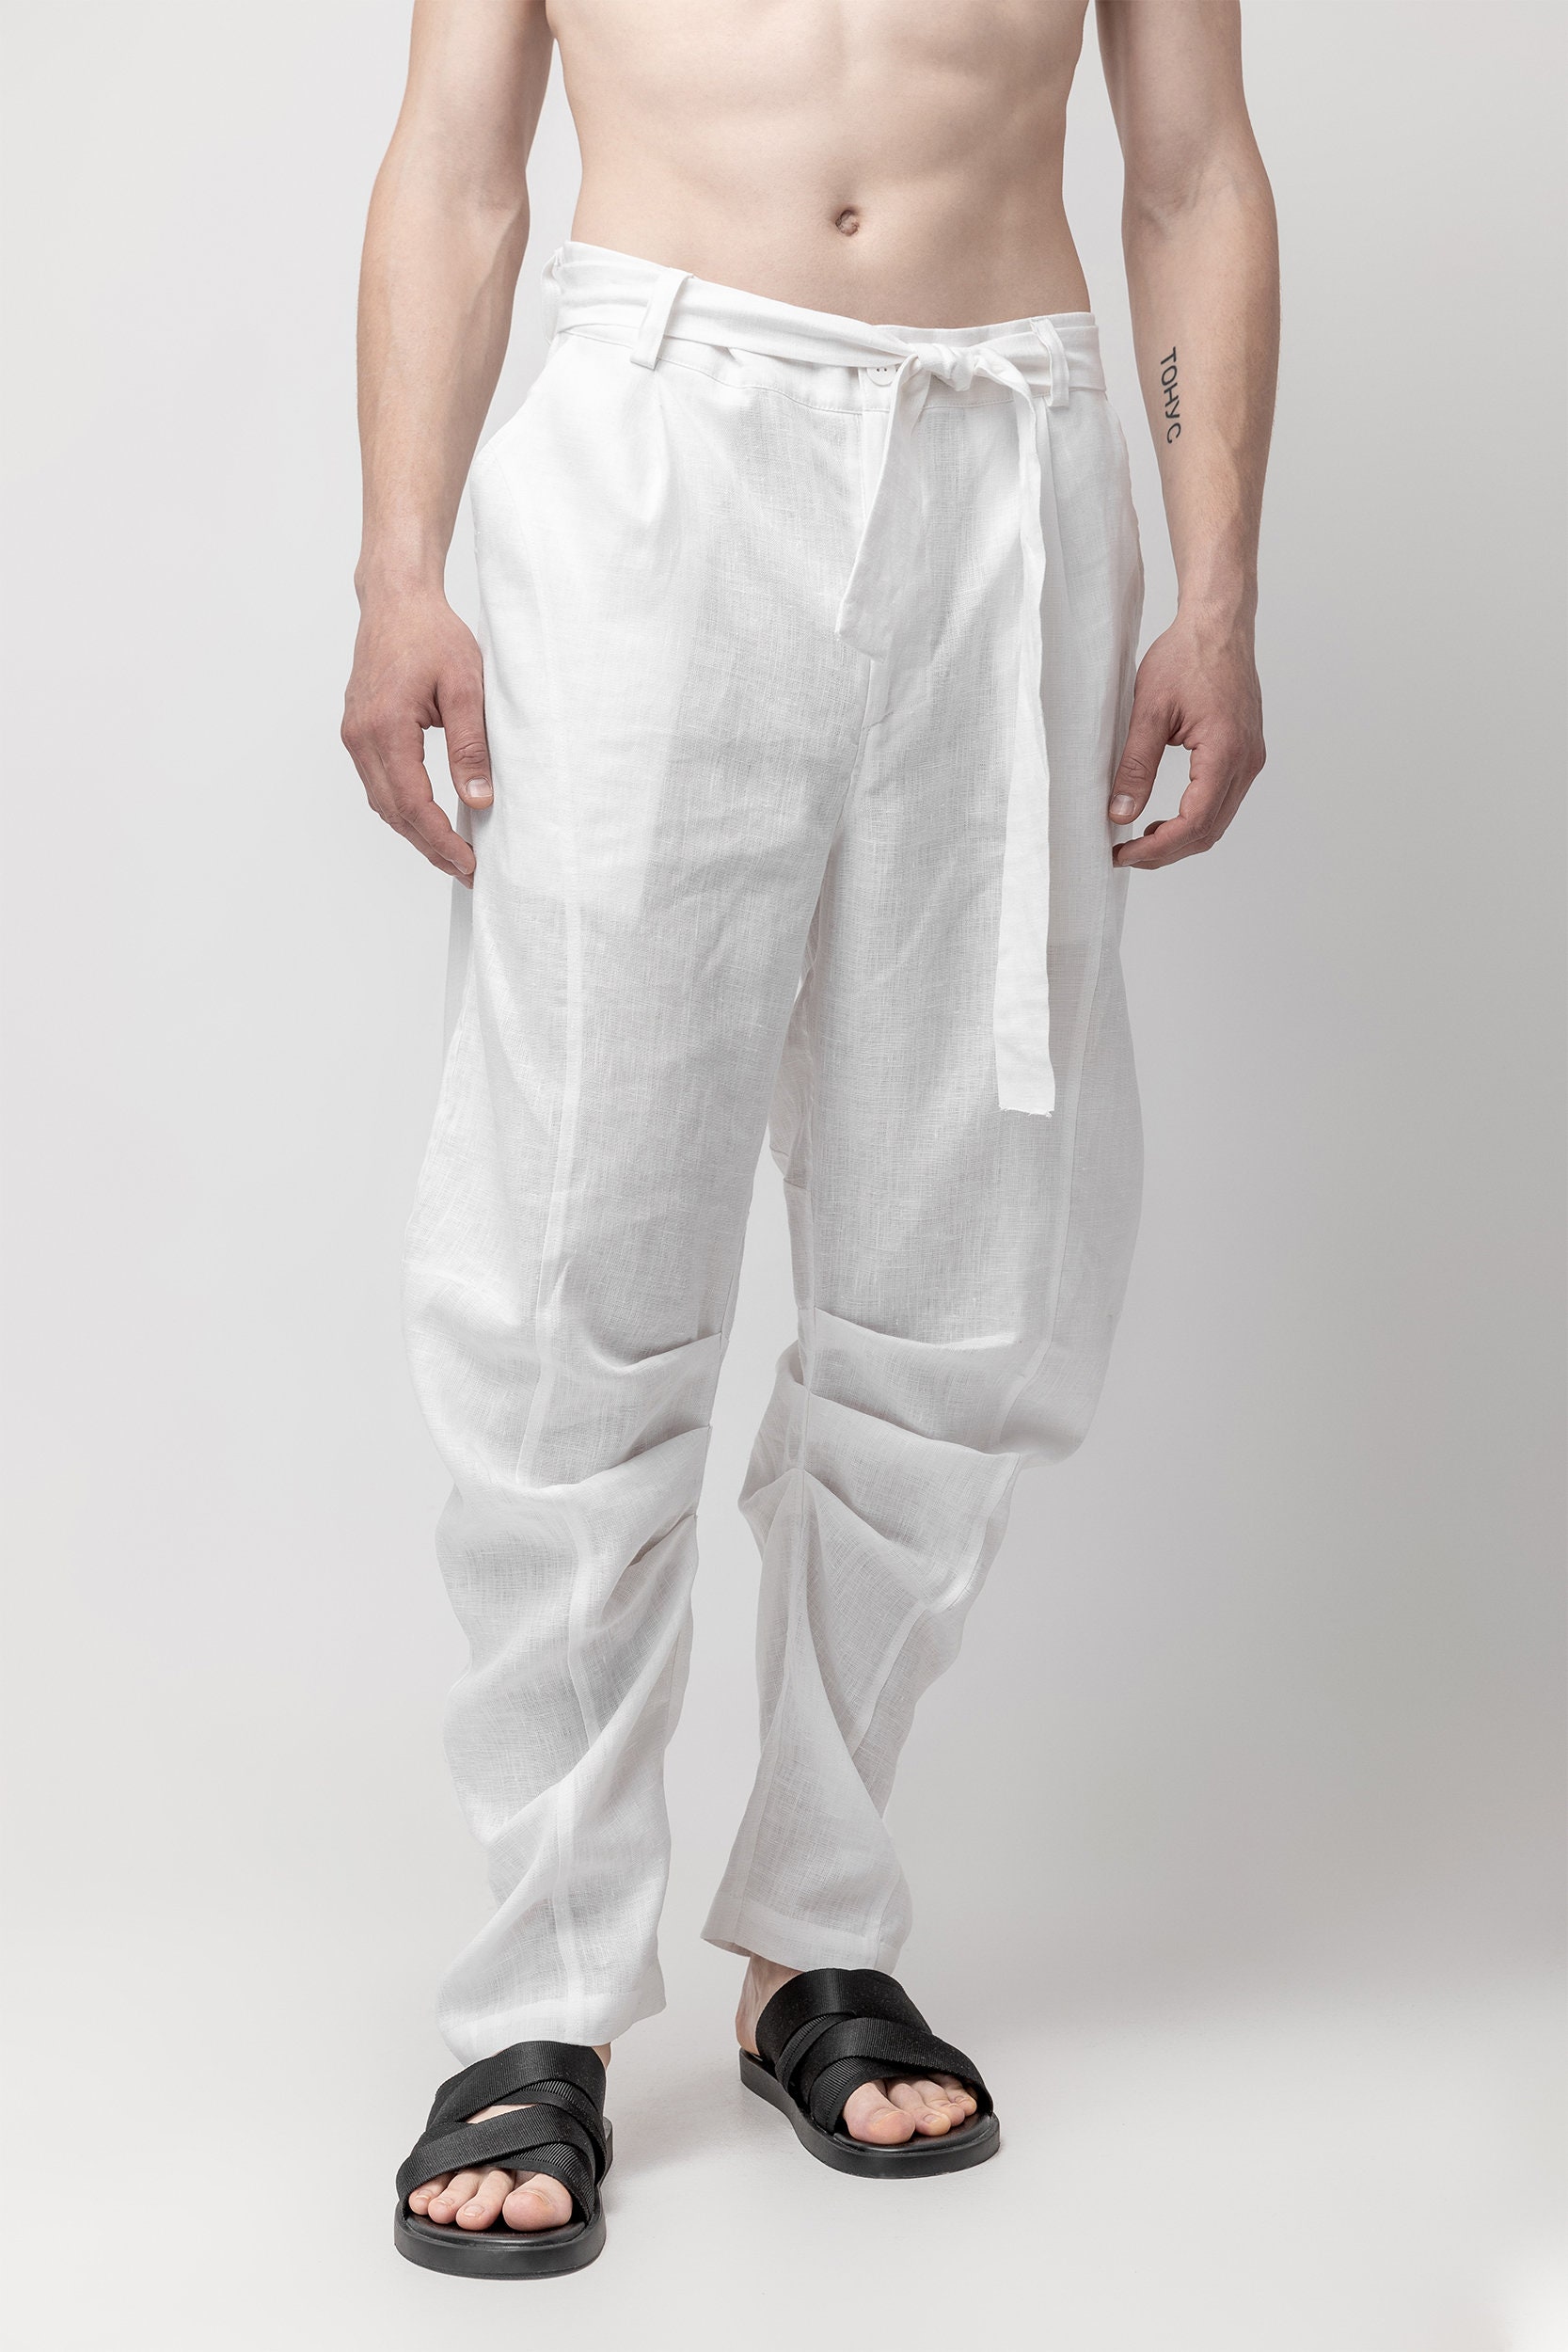 White Linen Pants Mens Harem Futuristic Trousers Hippie Yoga - Etsy